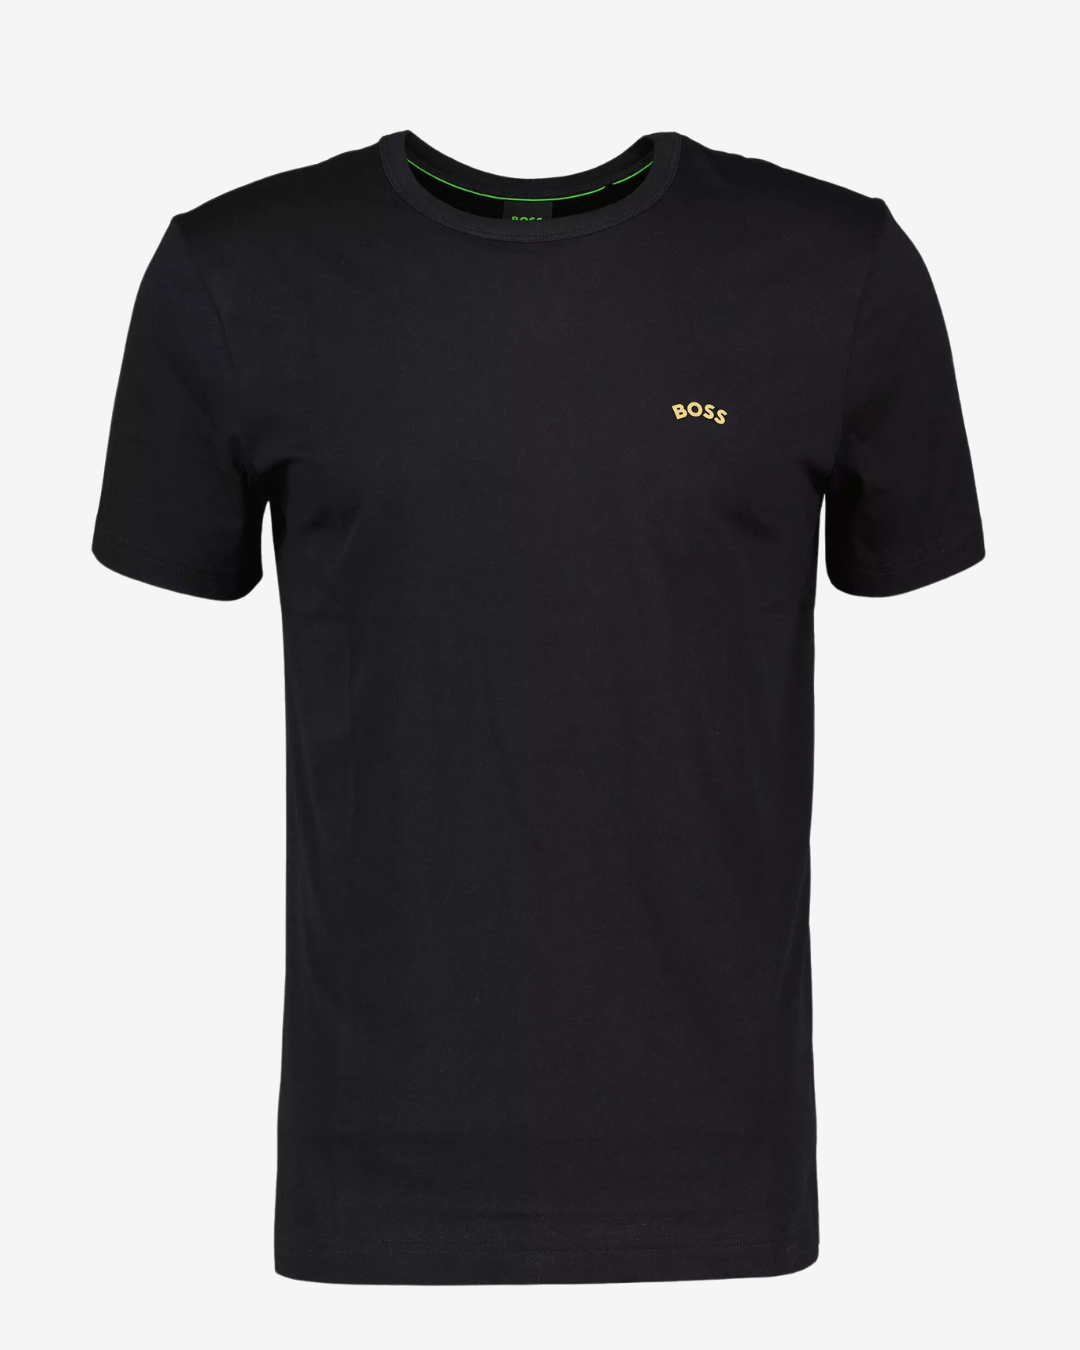 Se Hugo Boss Curved logo t-shirt - Sort / Guld - Str. XL - Modish.dk hos Modish.dk